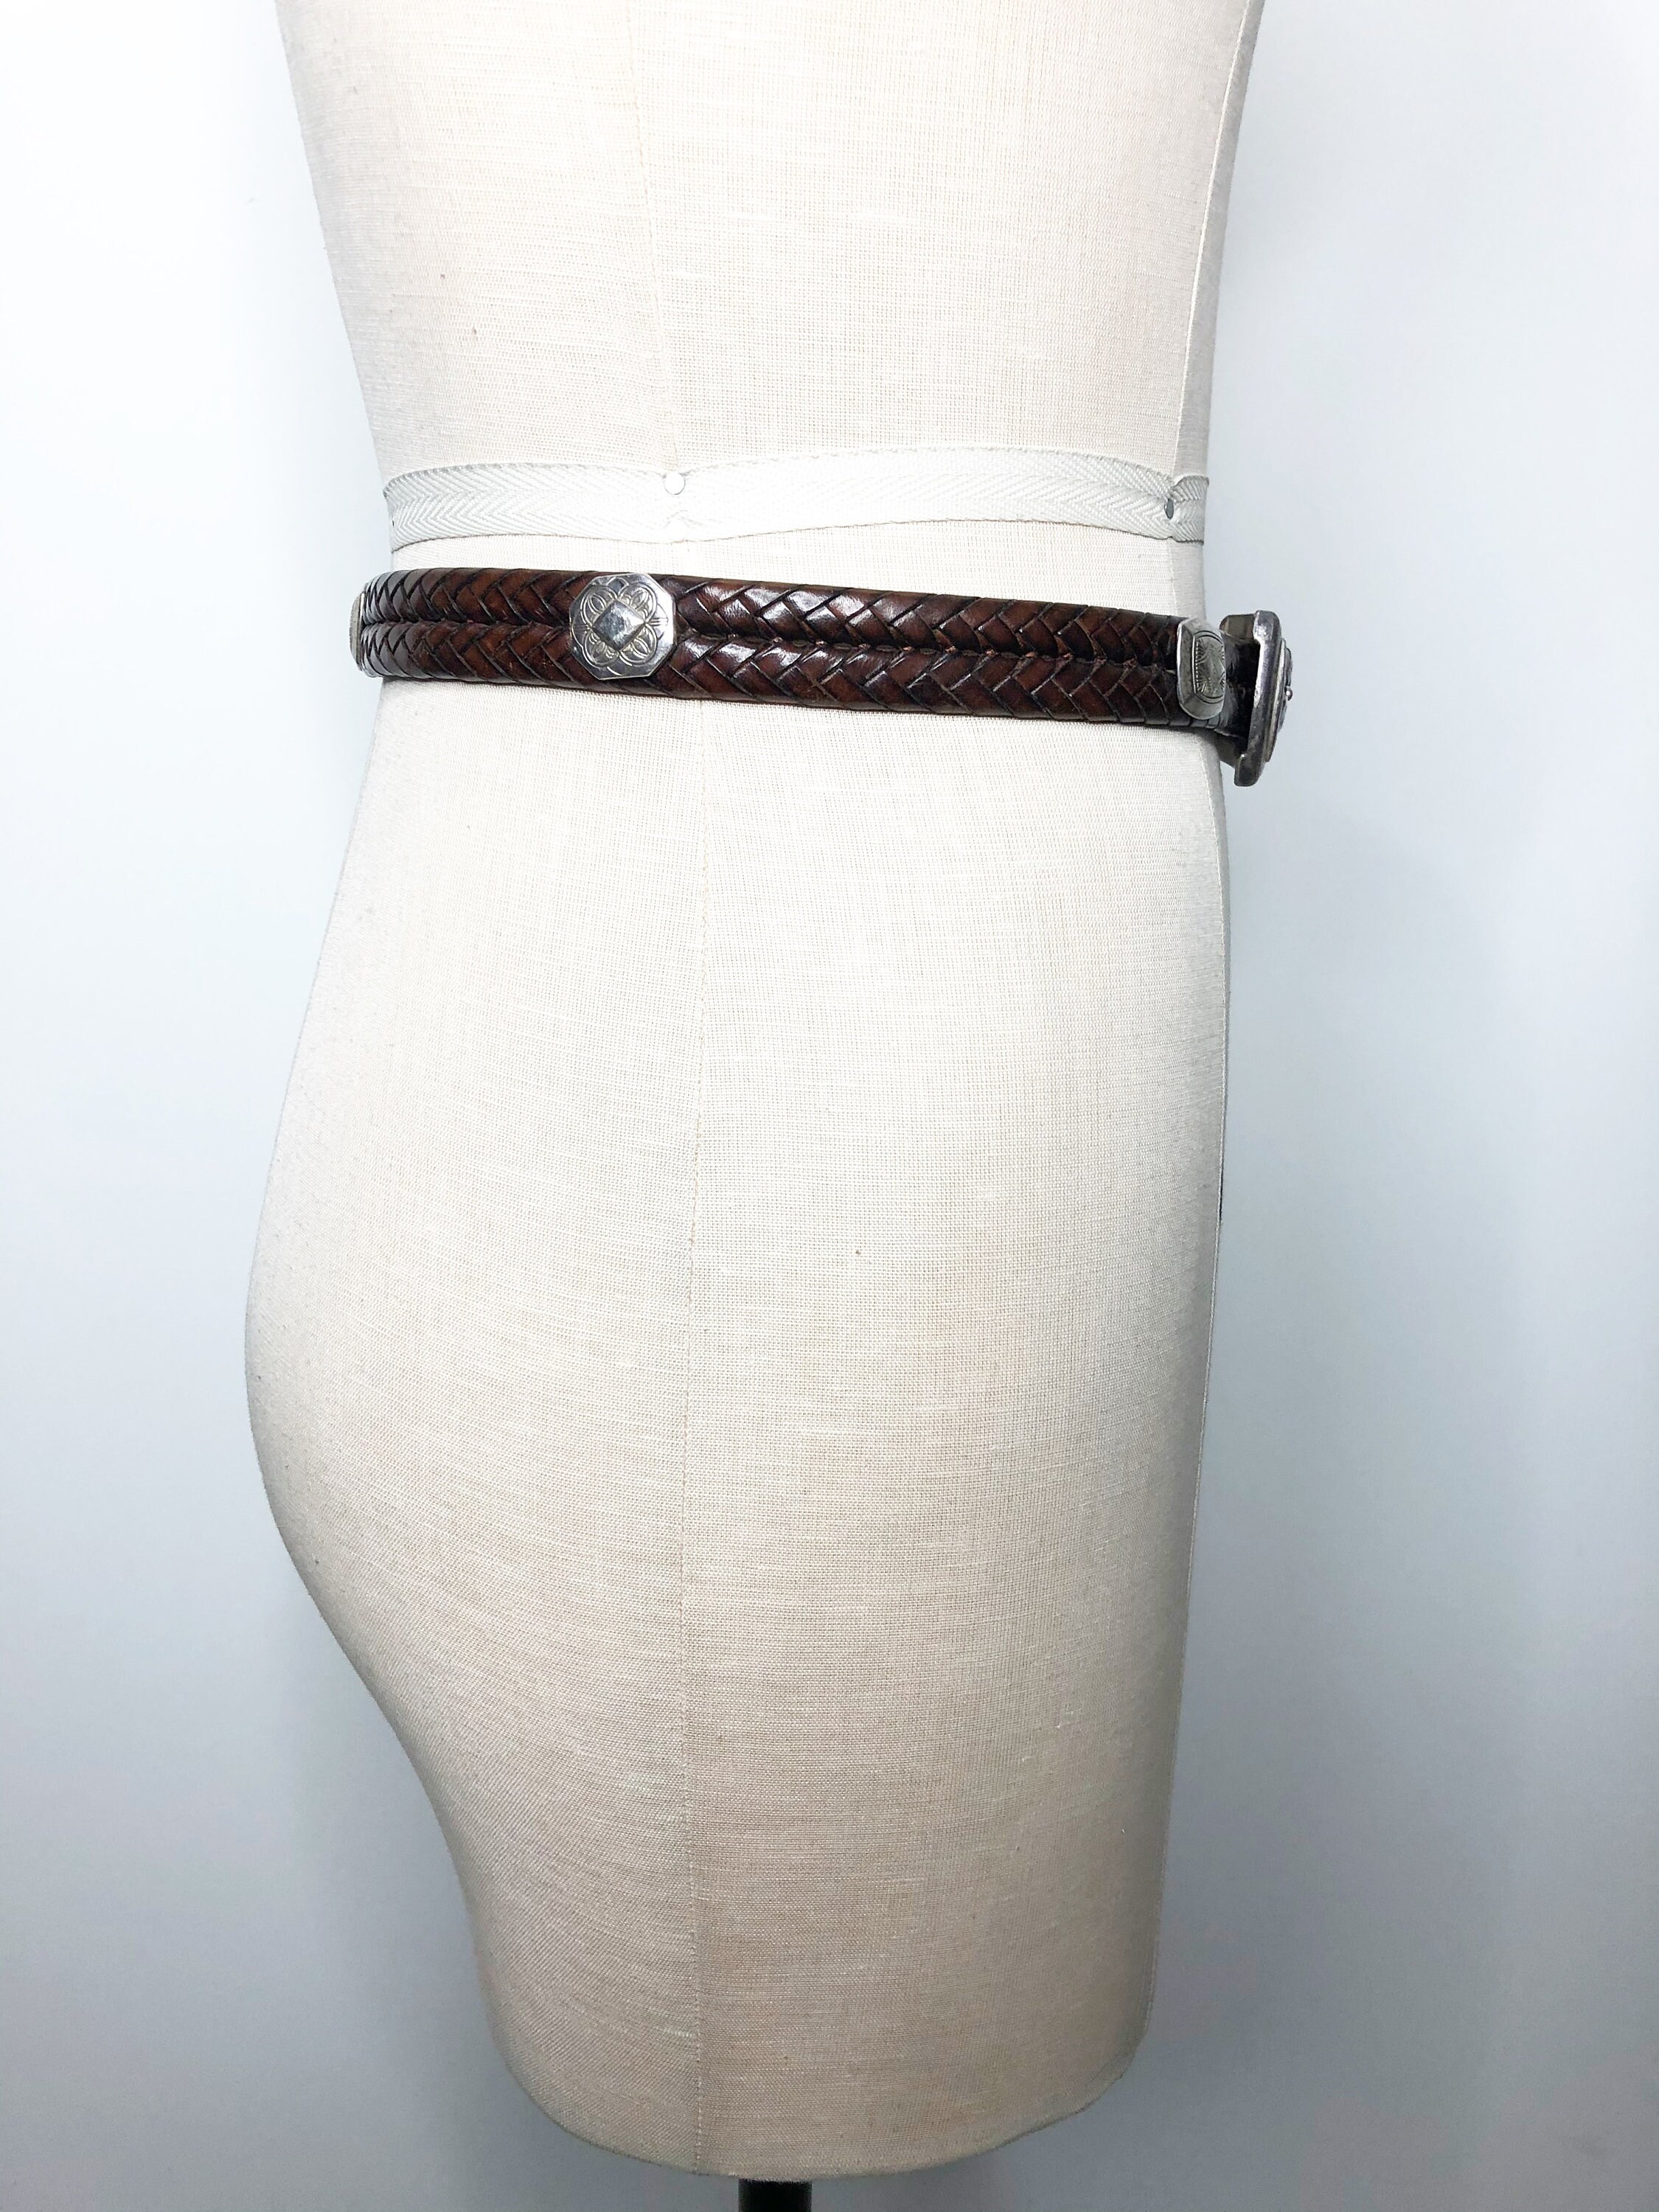 Vintage Brighton Belt Woven Brown Leather Belt Size M 30 - Etsy